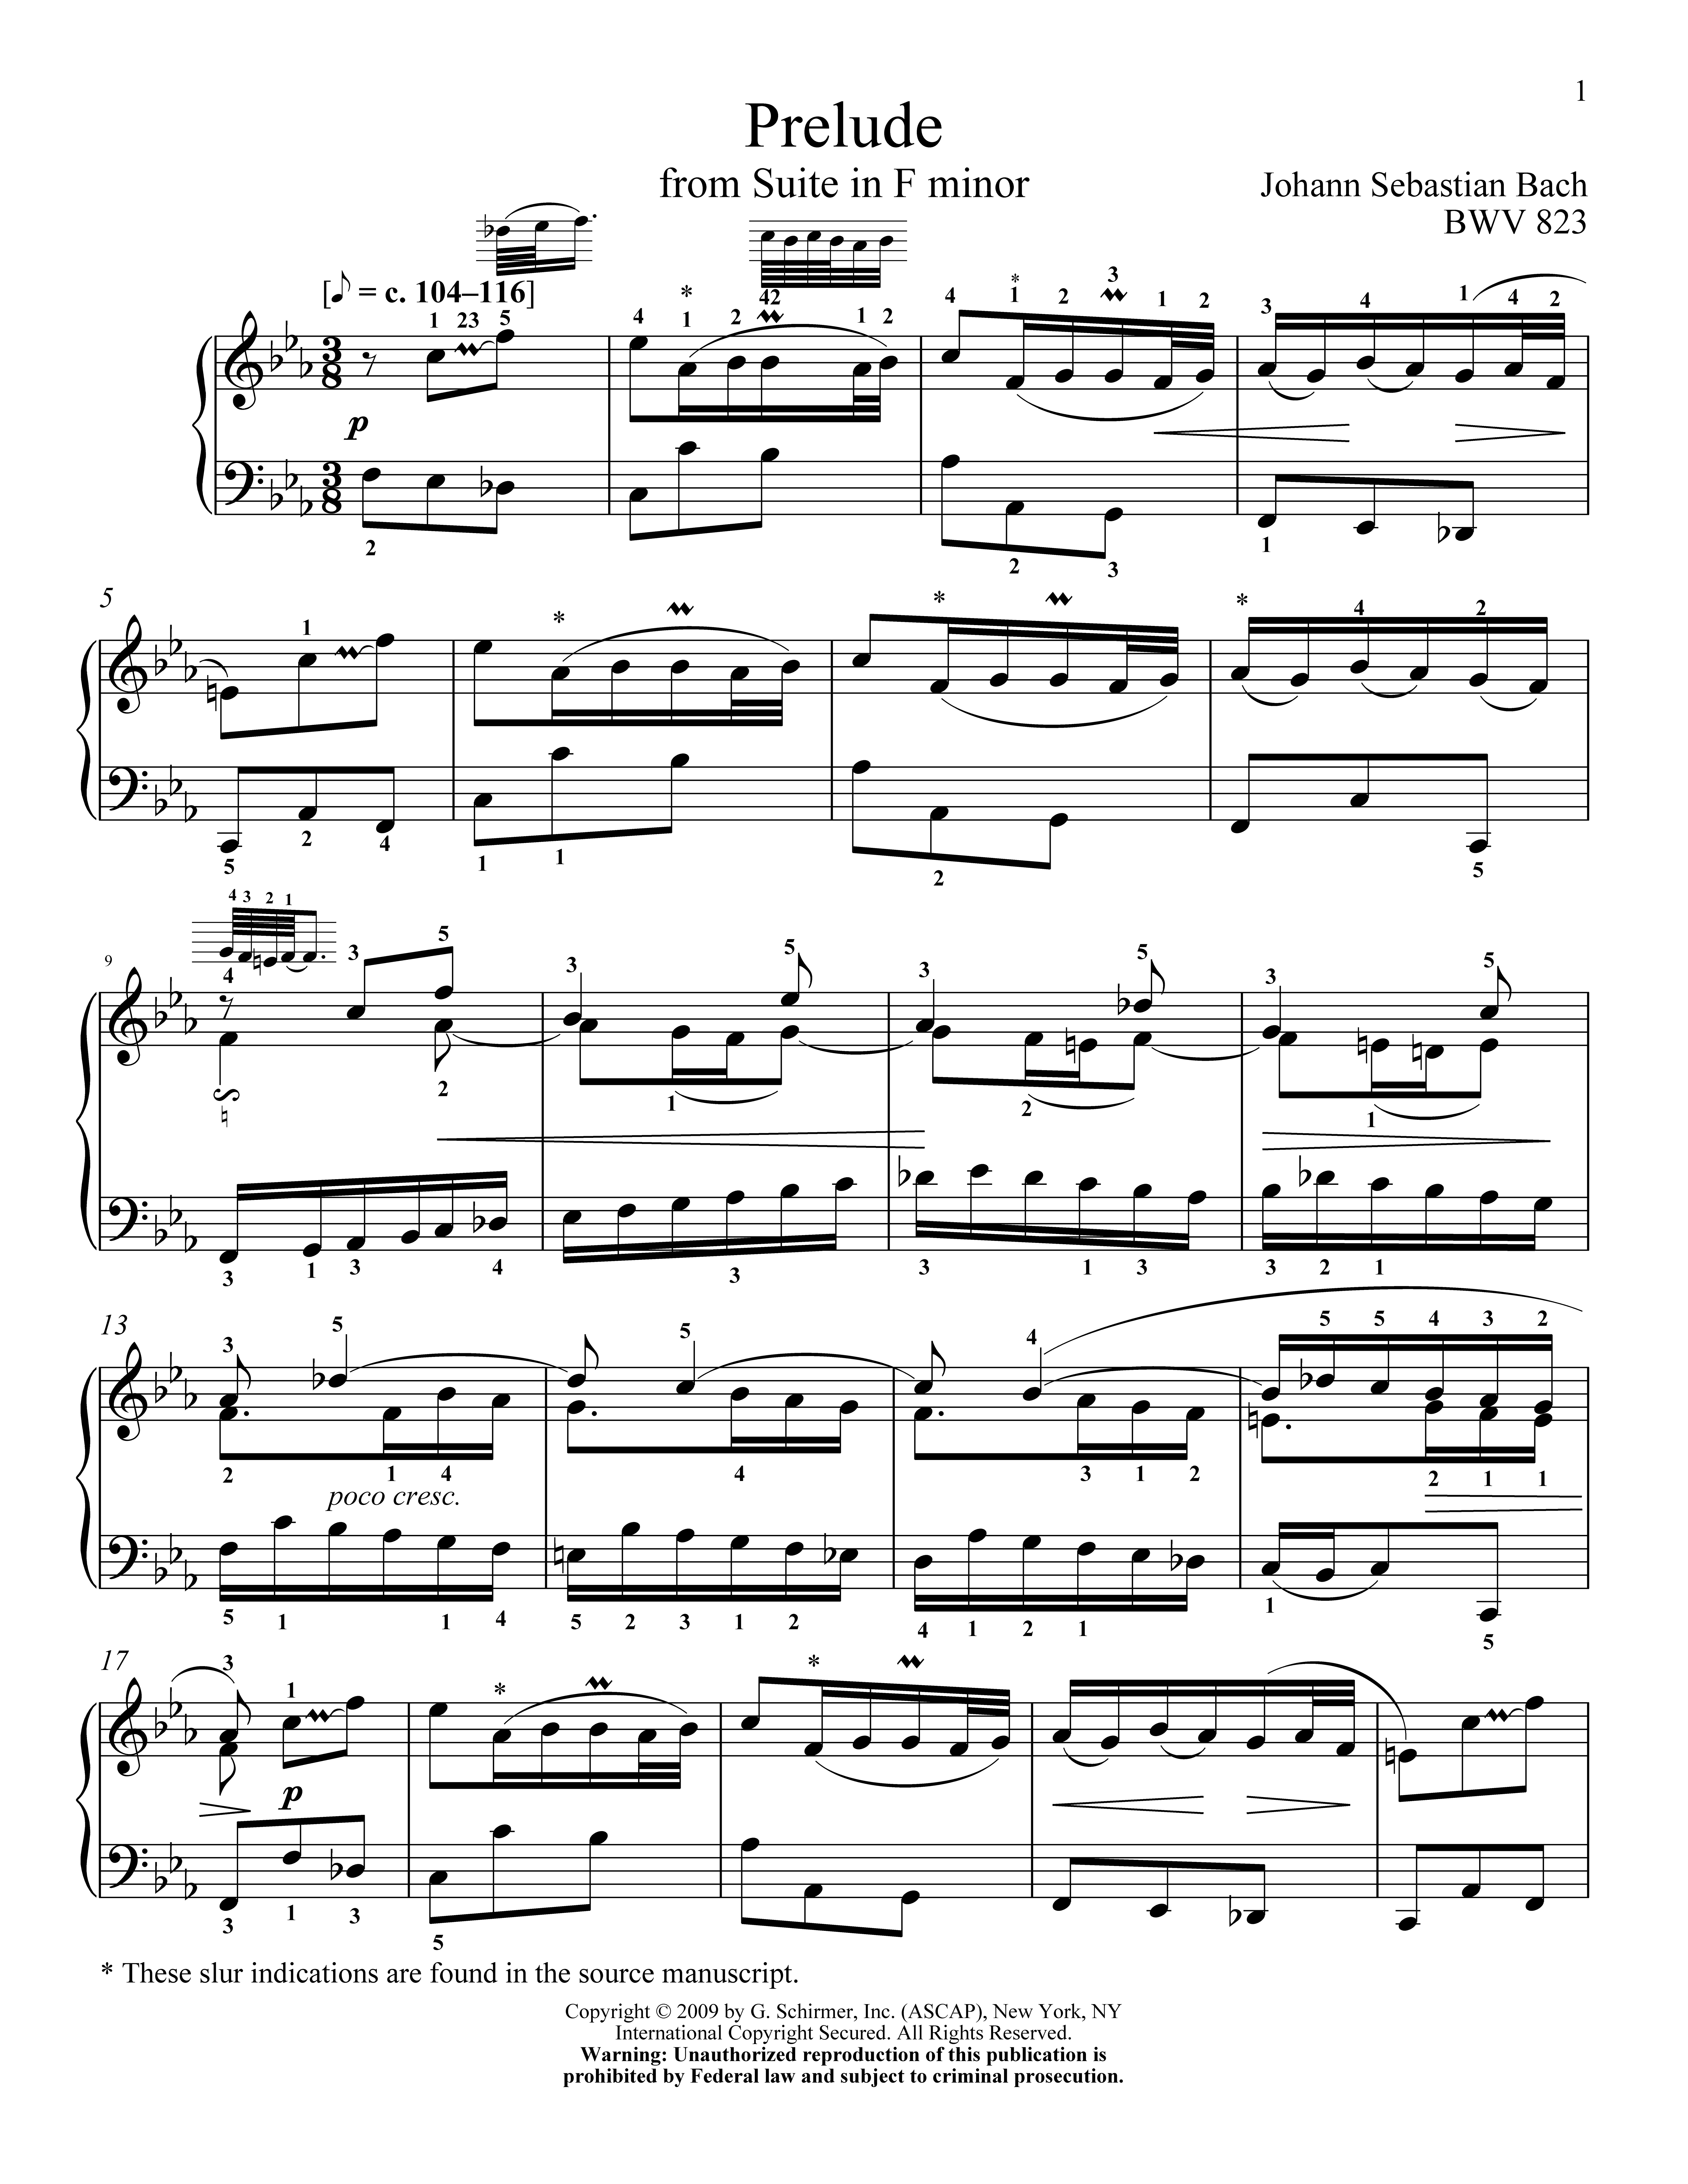 Johann Sebastian Bach Prelude, BWV 823 Sheet Music Notes & Chords for Piano - Download or Print PDF